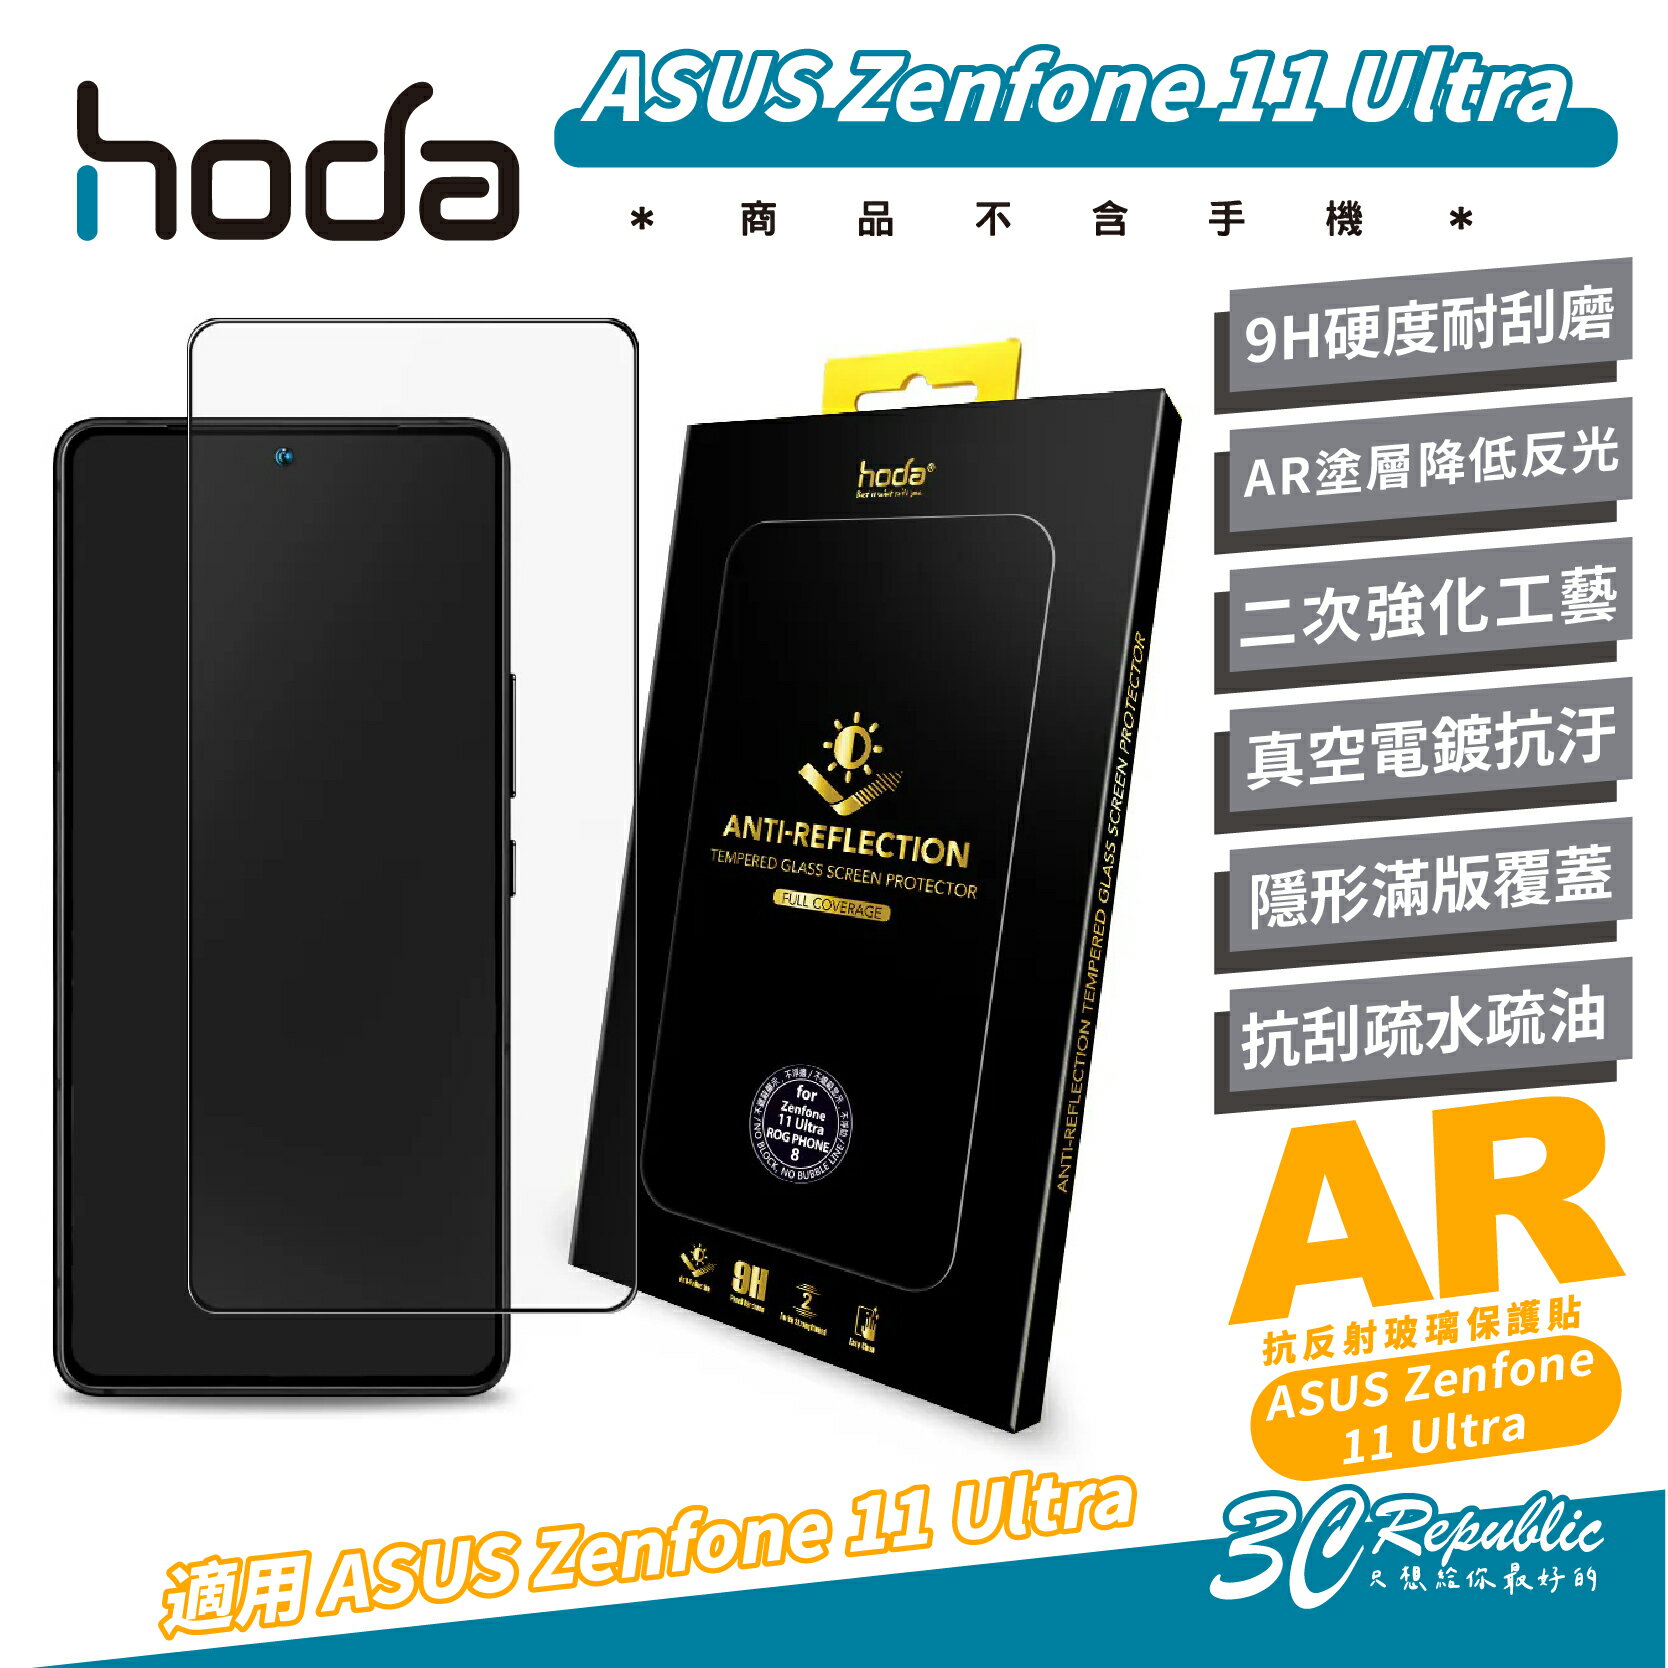 hoda 9H AR 抗反射 亮面 玻璃貼 保護貼 螢幕貼 適 ASUS Zenfone 11 Ultra【APP下單8%點數回饋】